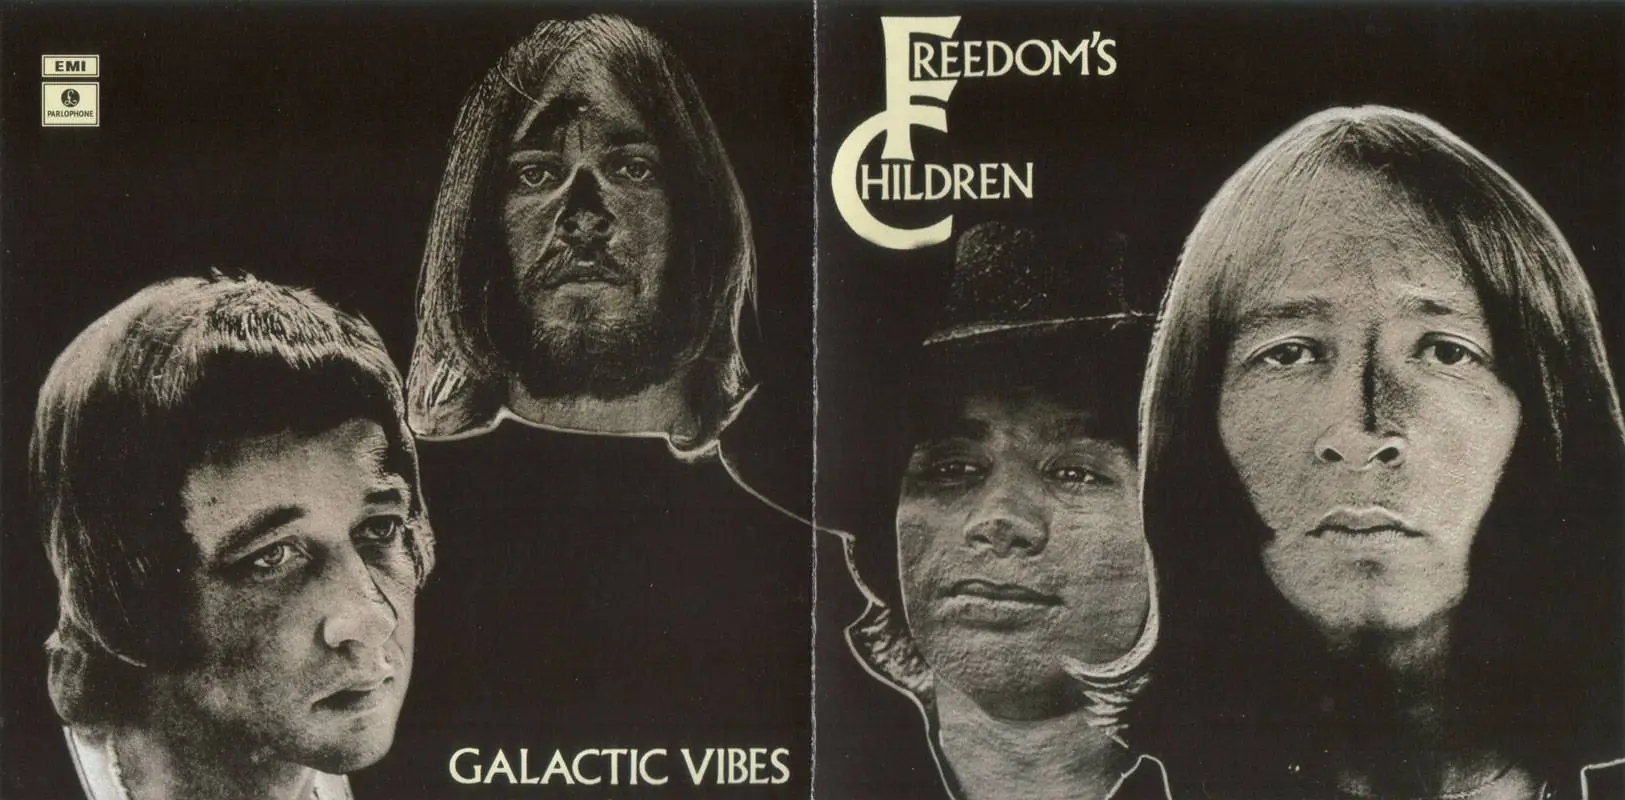 Freedom's children. Freedom's children - Galactic Vibes (1971). Freedom's children - Astra (1970. Freedom (1971). Mick Jagger 1967.